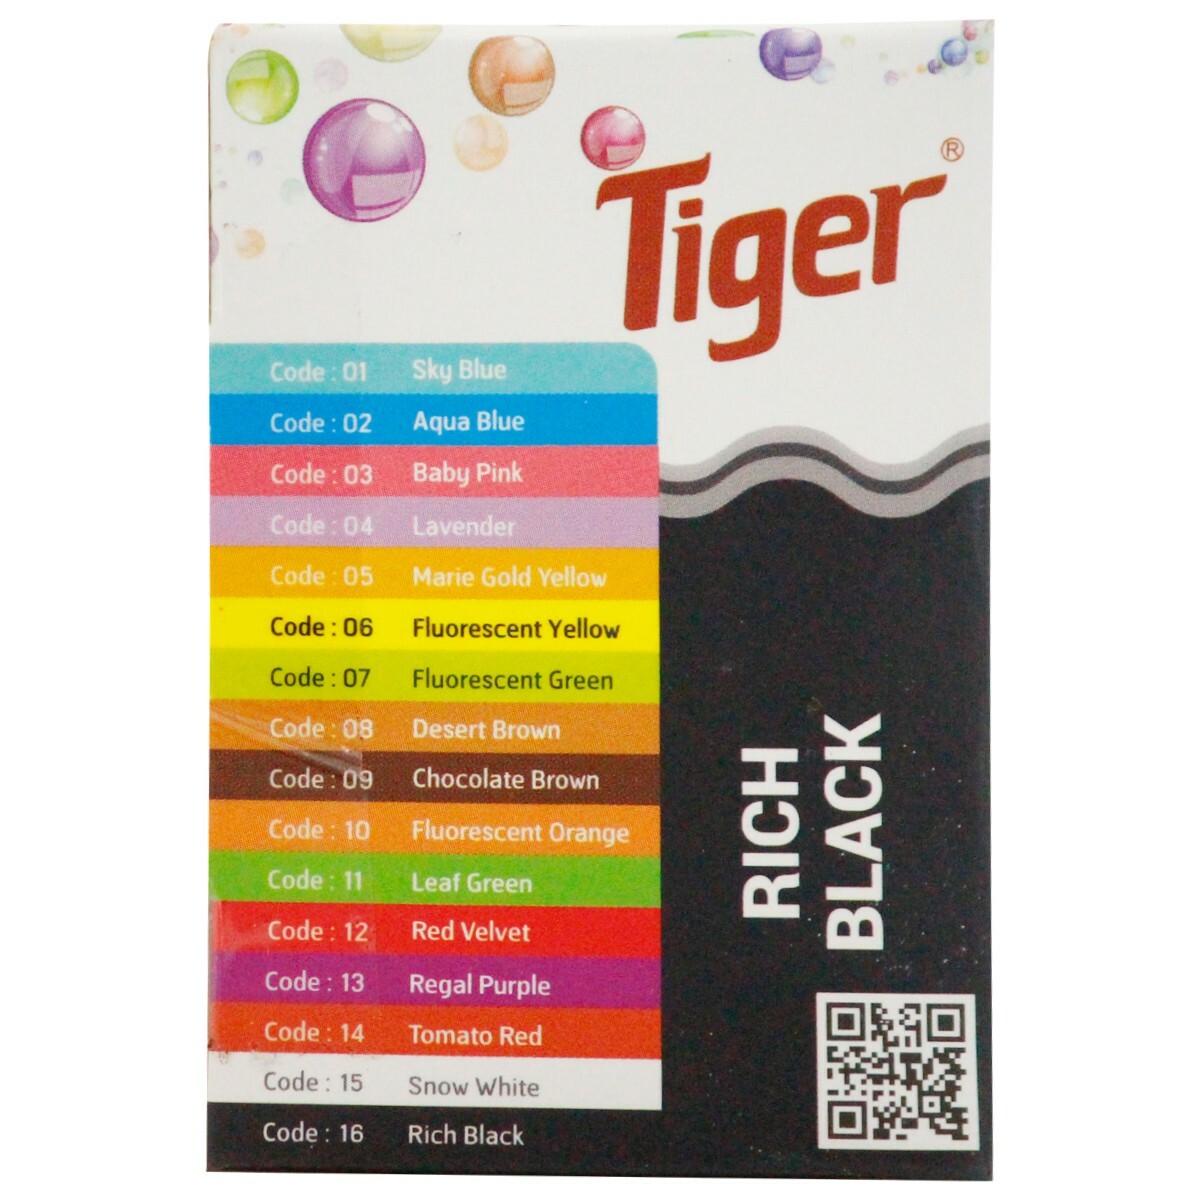 Tiger Gel Colour Rich Black 15ml